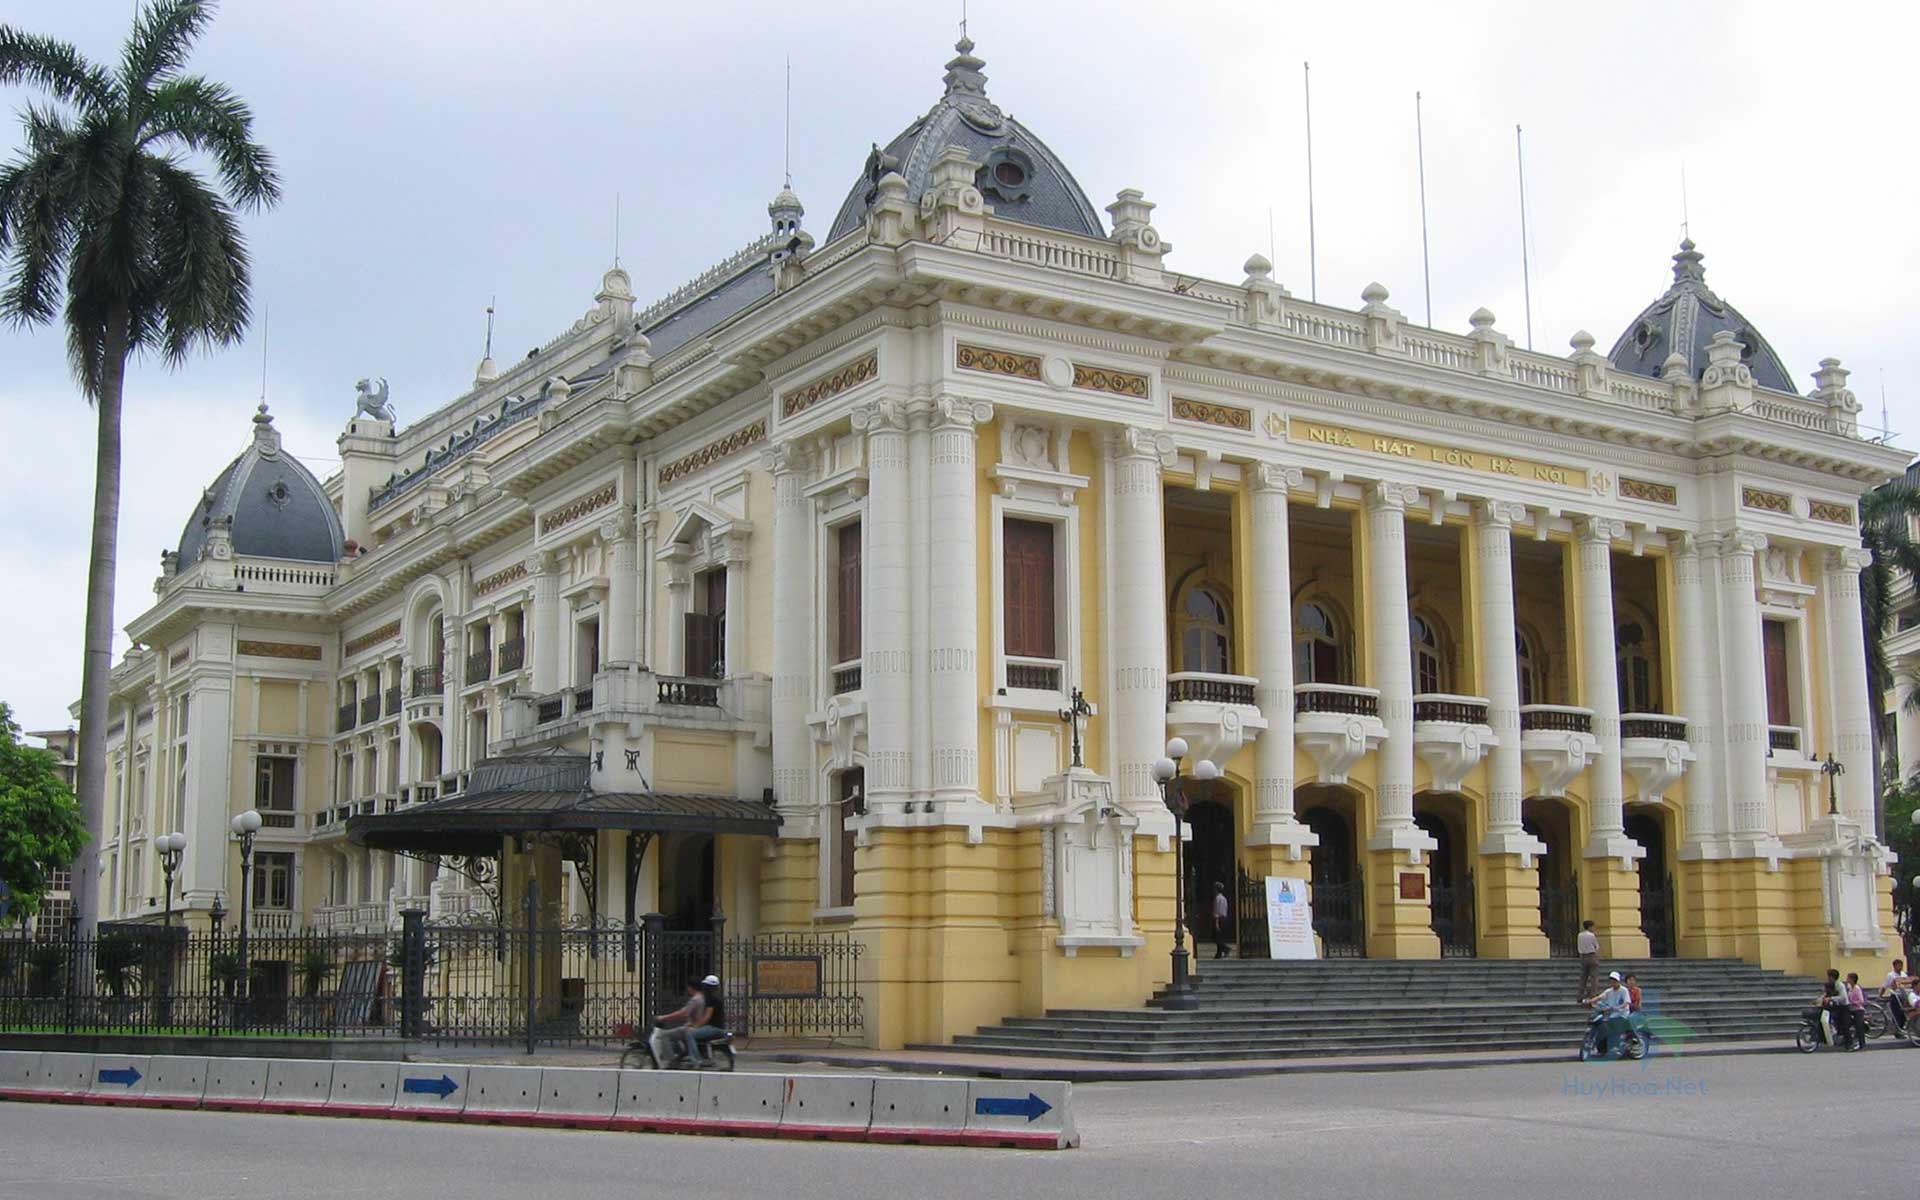 Hanoi Opera House - Architecture and History